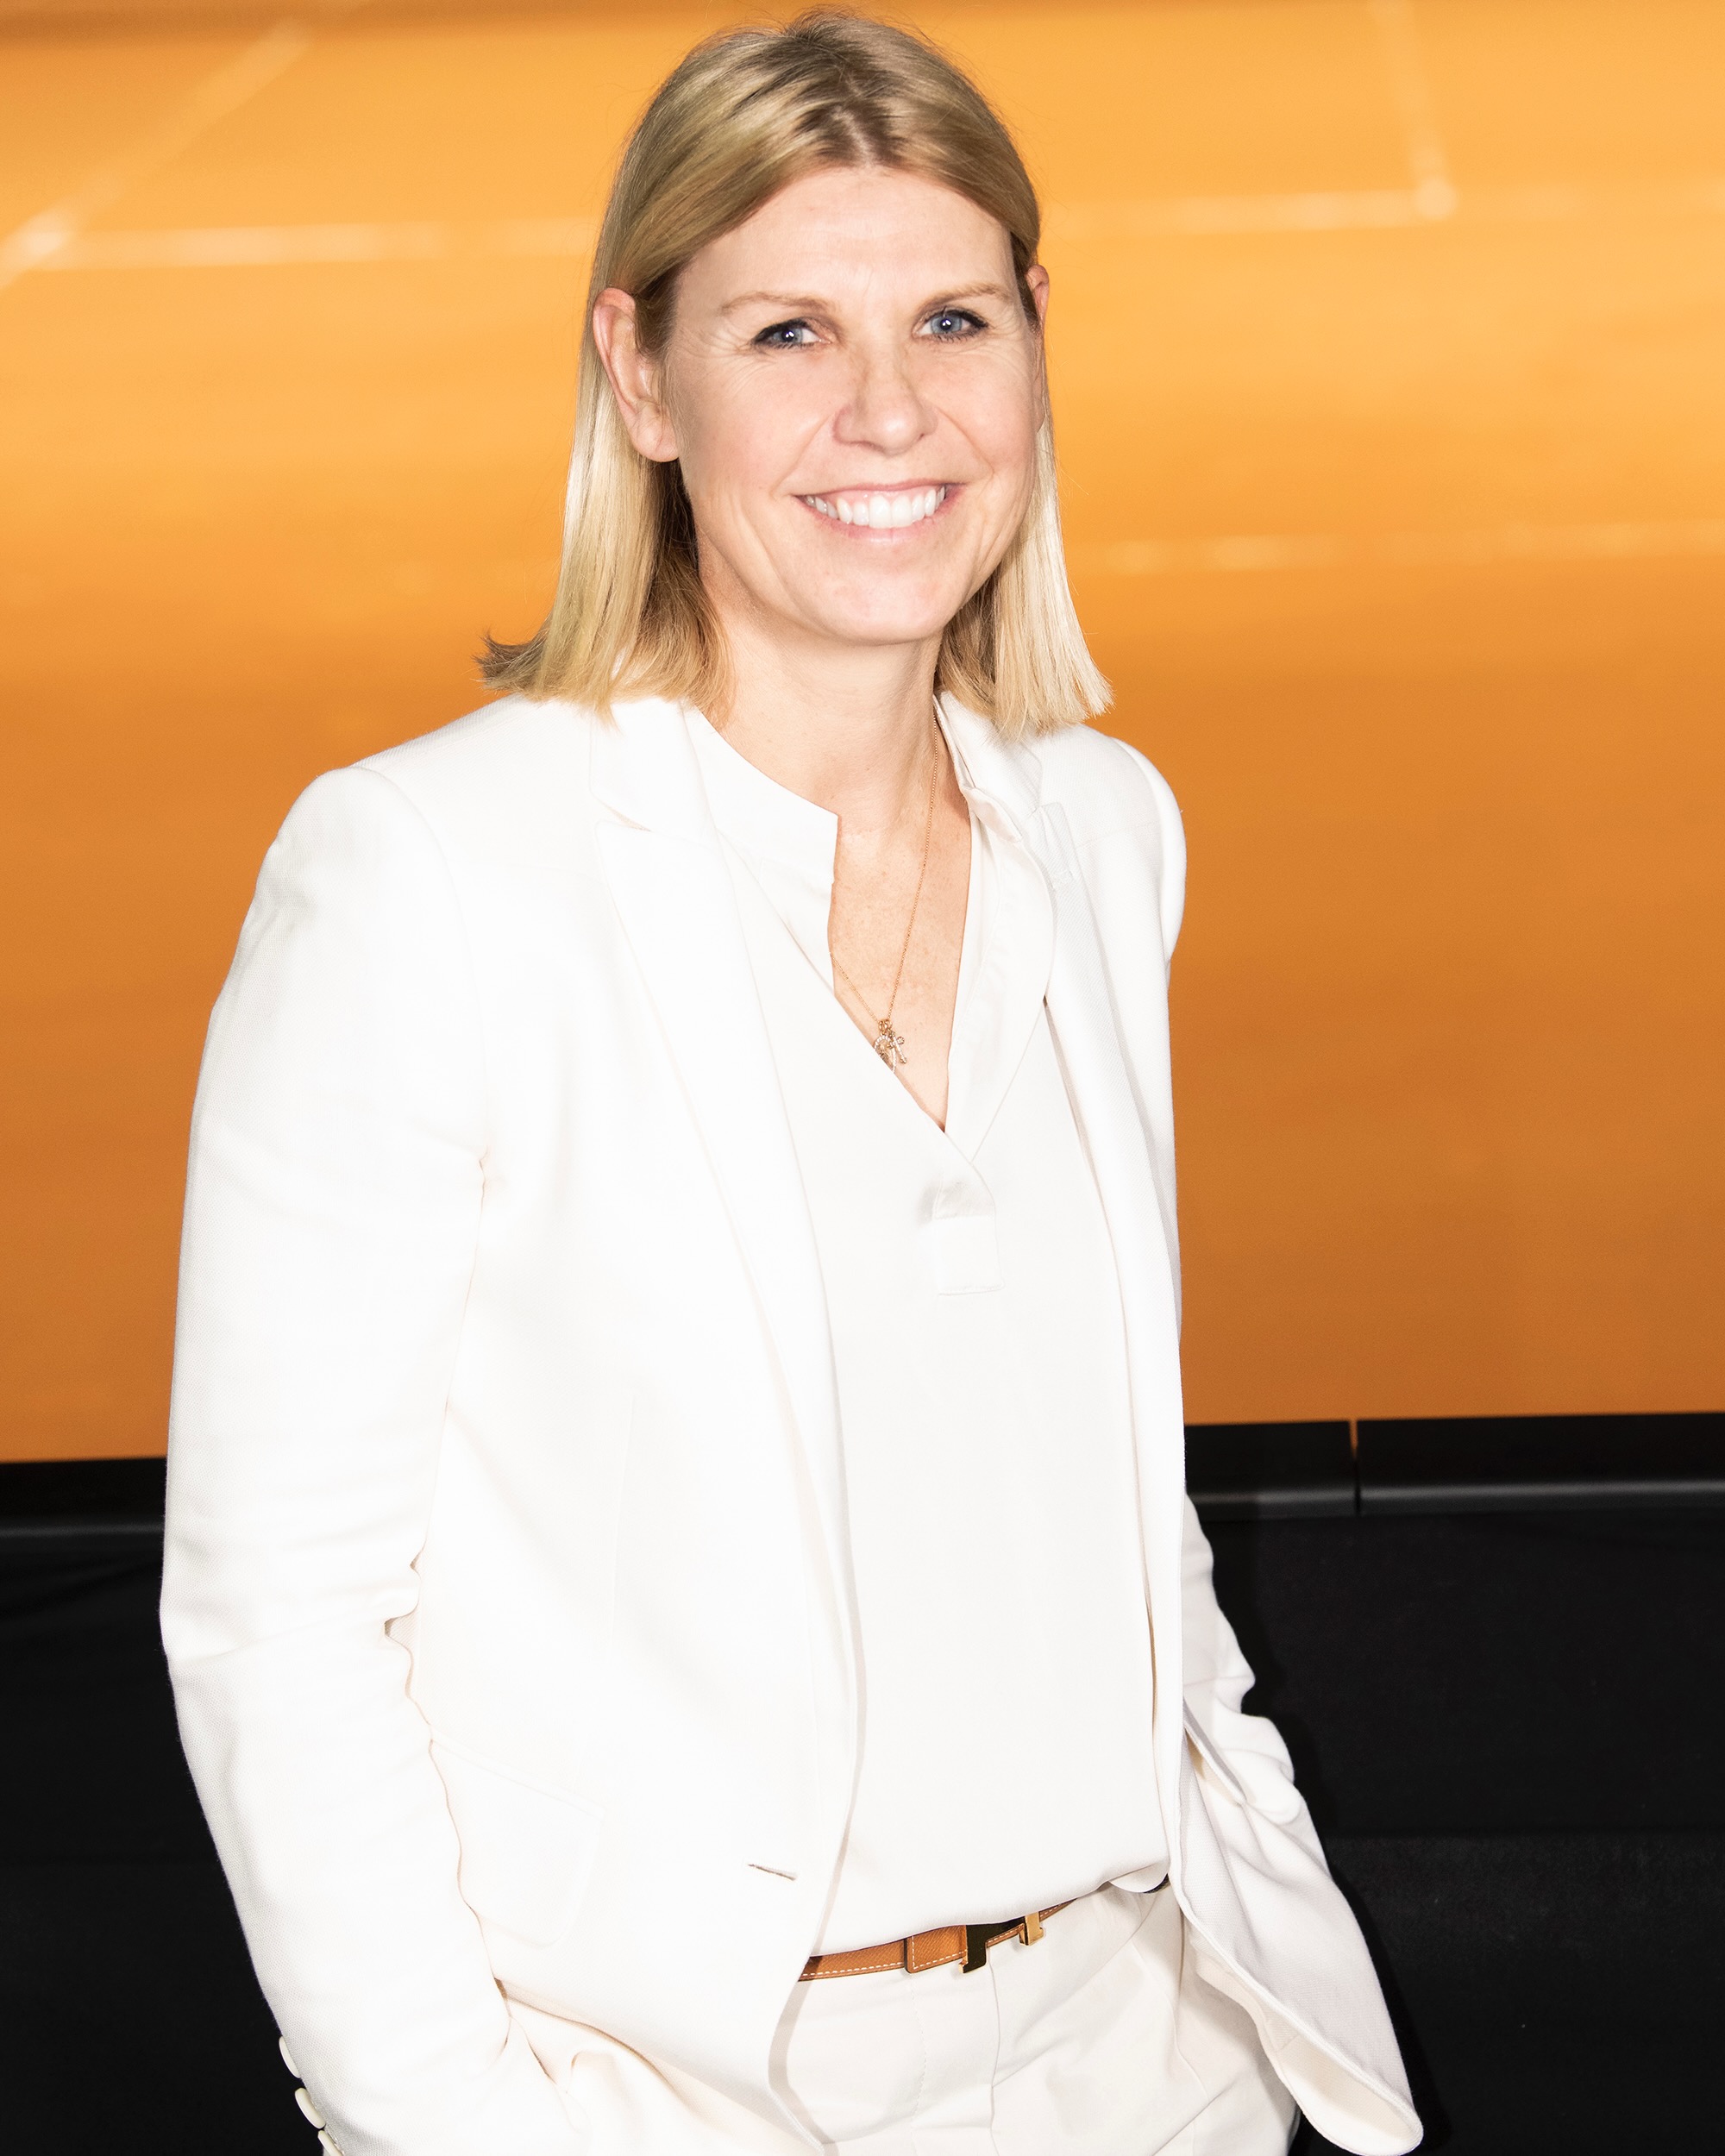 Anke Huber, Directora de Operaciones del Torneo, Porsche Tennis Grand Prix, 2023, Porsche AG